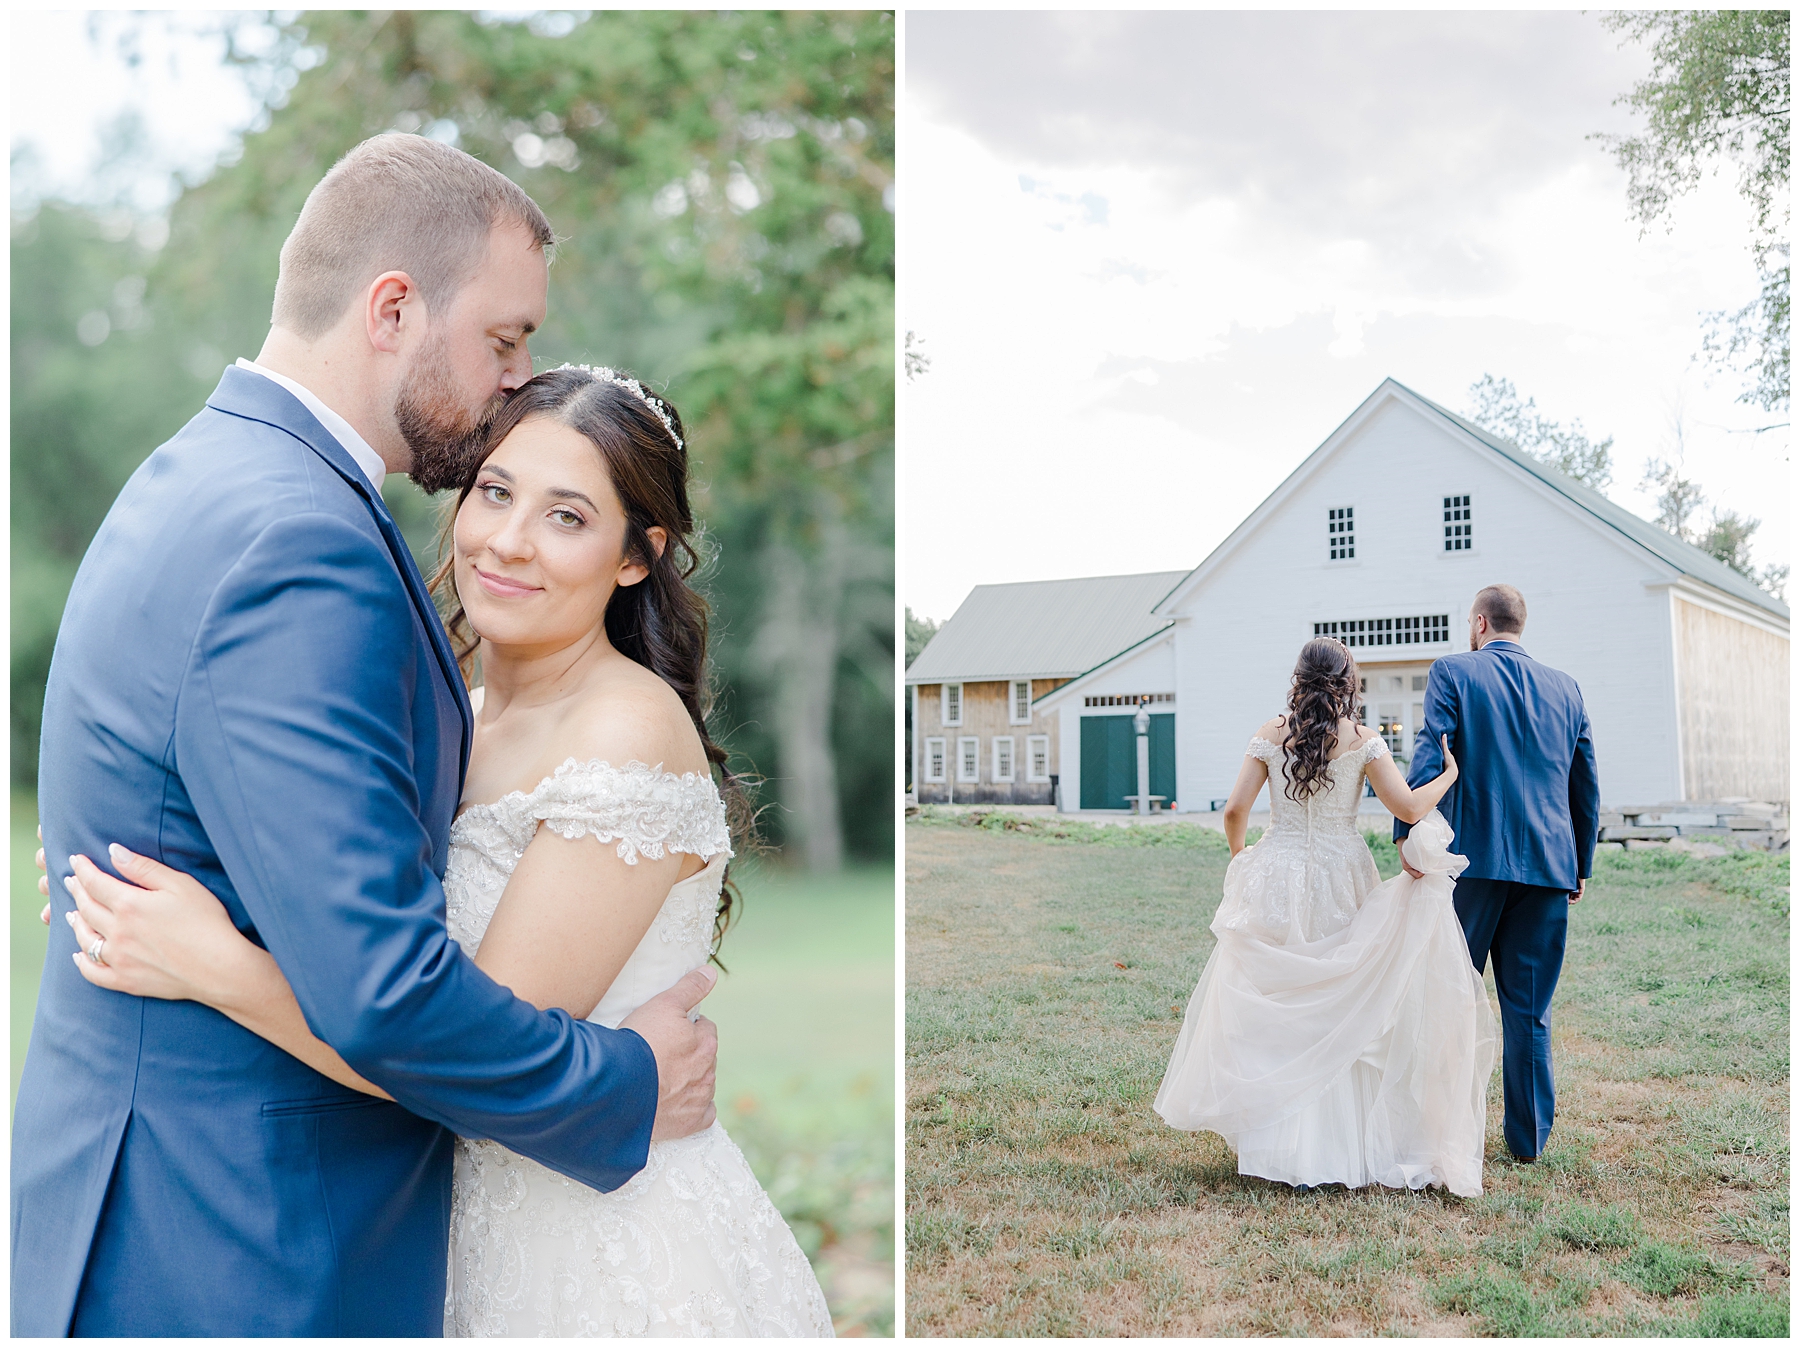 bride and groom explore the property at New Hampshire Wedding venue The Barn at Powder Major's Farm